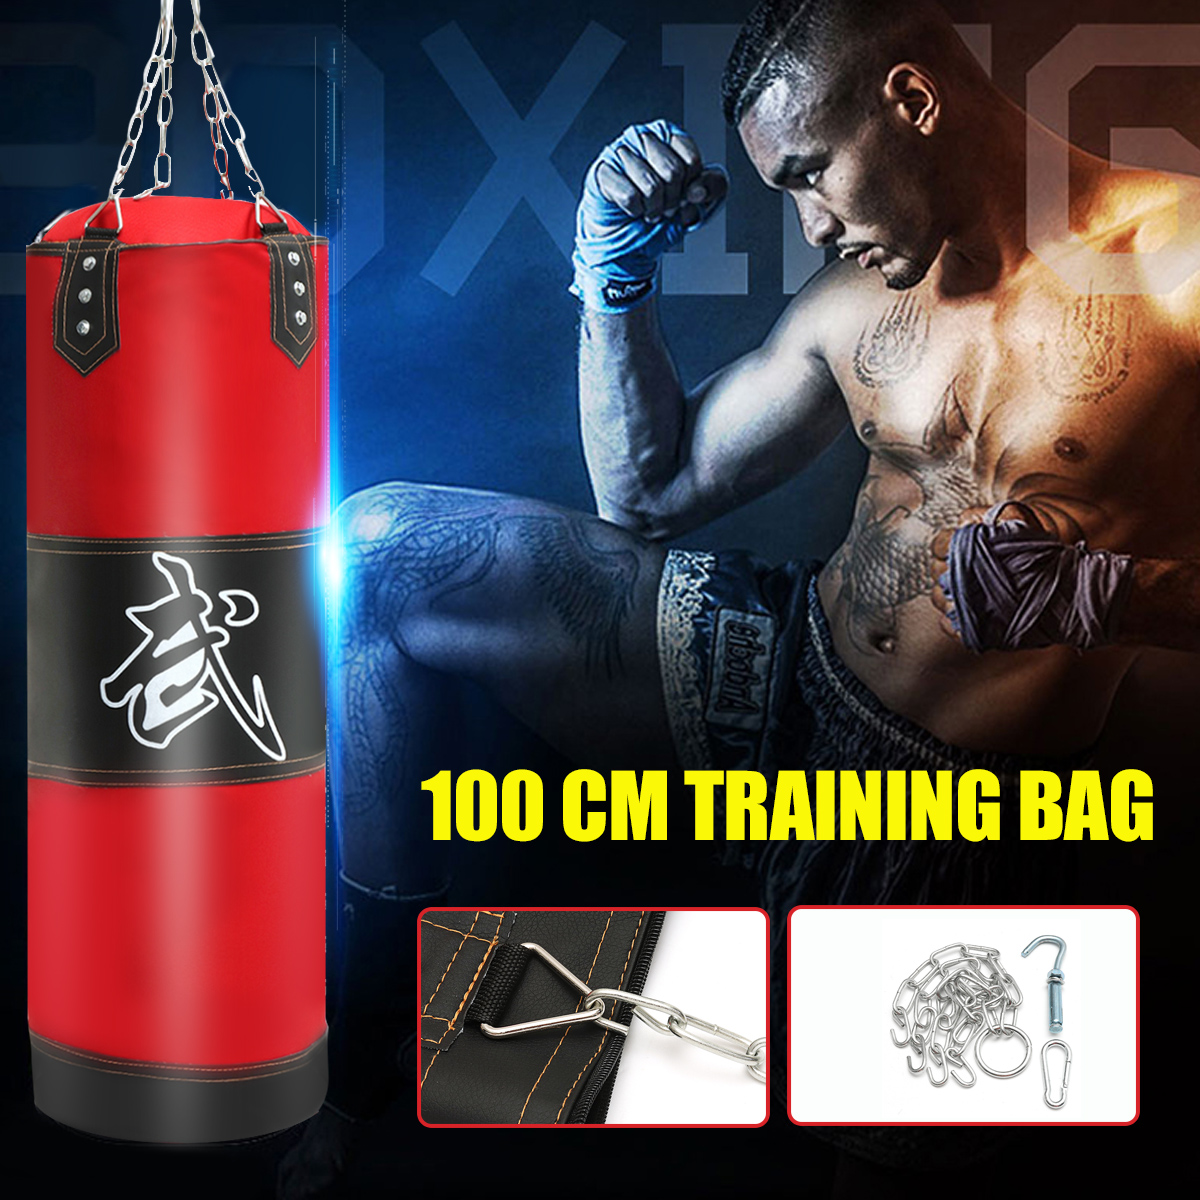 Details about   OZ 100cm Heavy Duty Punching Training Bag Boxing Martial Arts Kicking Sandbag 